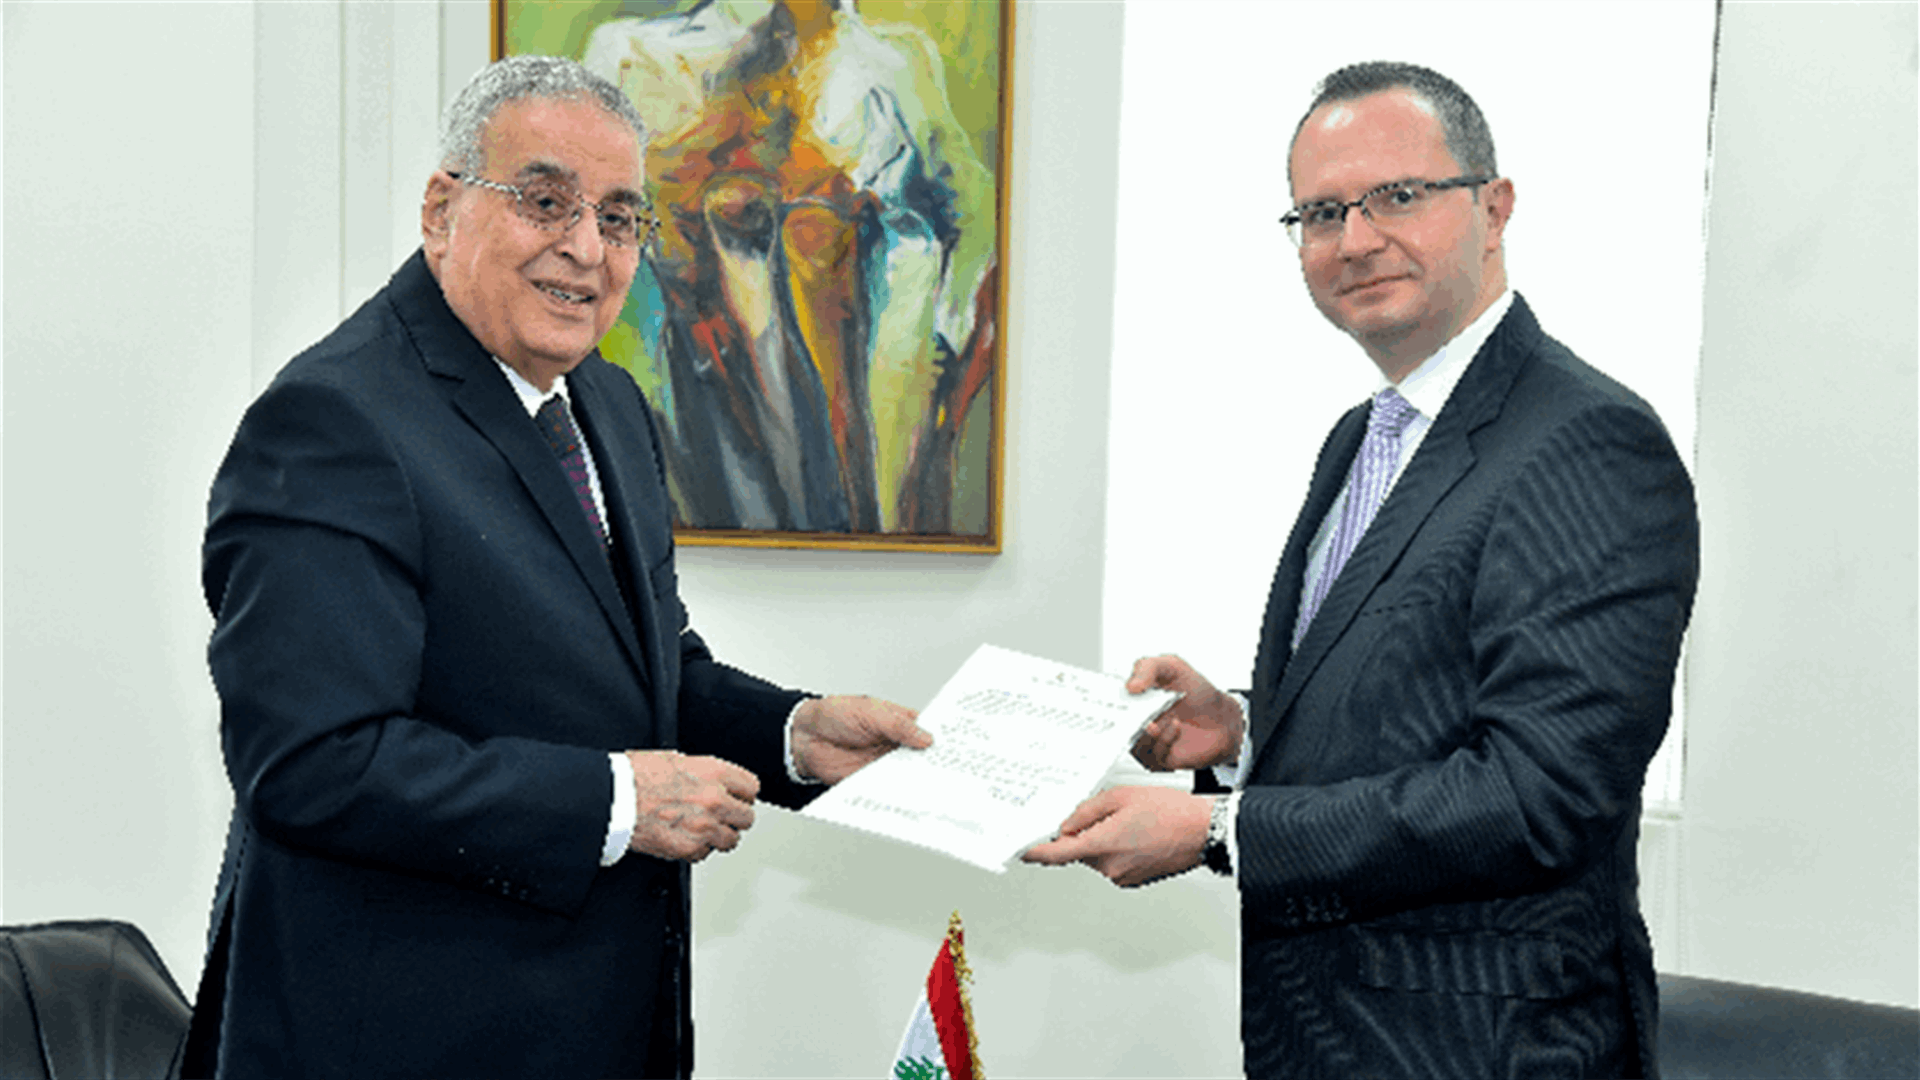 Foreign Affairs Minister Bou Habib meets Turkish Ambassador to Lebanon